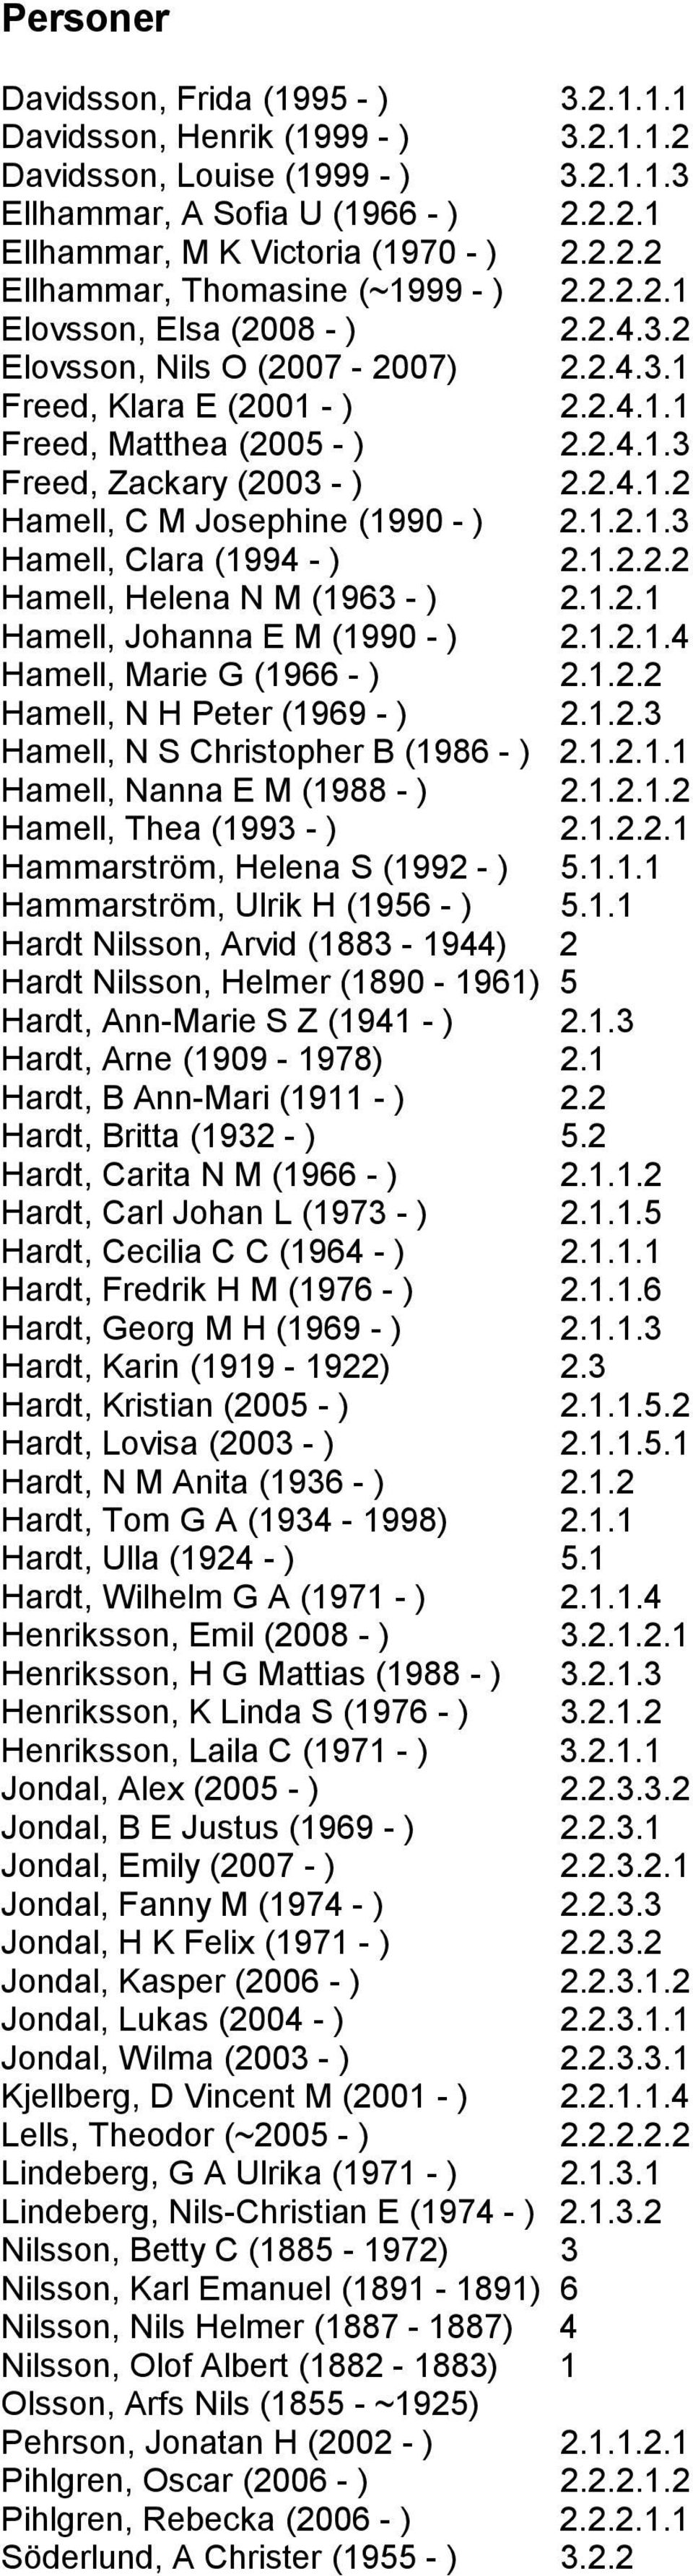 1.2.1.3 Hamell, Clara (1994 - ) 2.1.2.2.2 Hamell, Helena N M (1963 - ) 2.1.2.1 Hamell, Johanna E M (1990 - ) 2.1.2.1.4 Hamell, Marie G (1966 - ) 2.1.2.2 Hamell, N H Peter (1969 - ) 2.1.2.3 Hamell, N S Christopher B (1986 - ) 2.